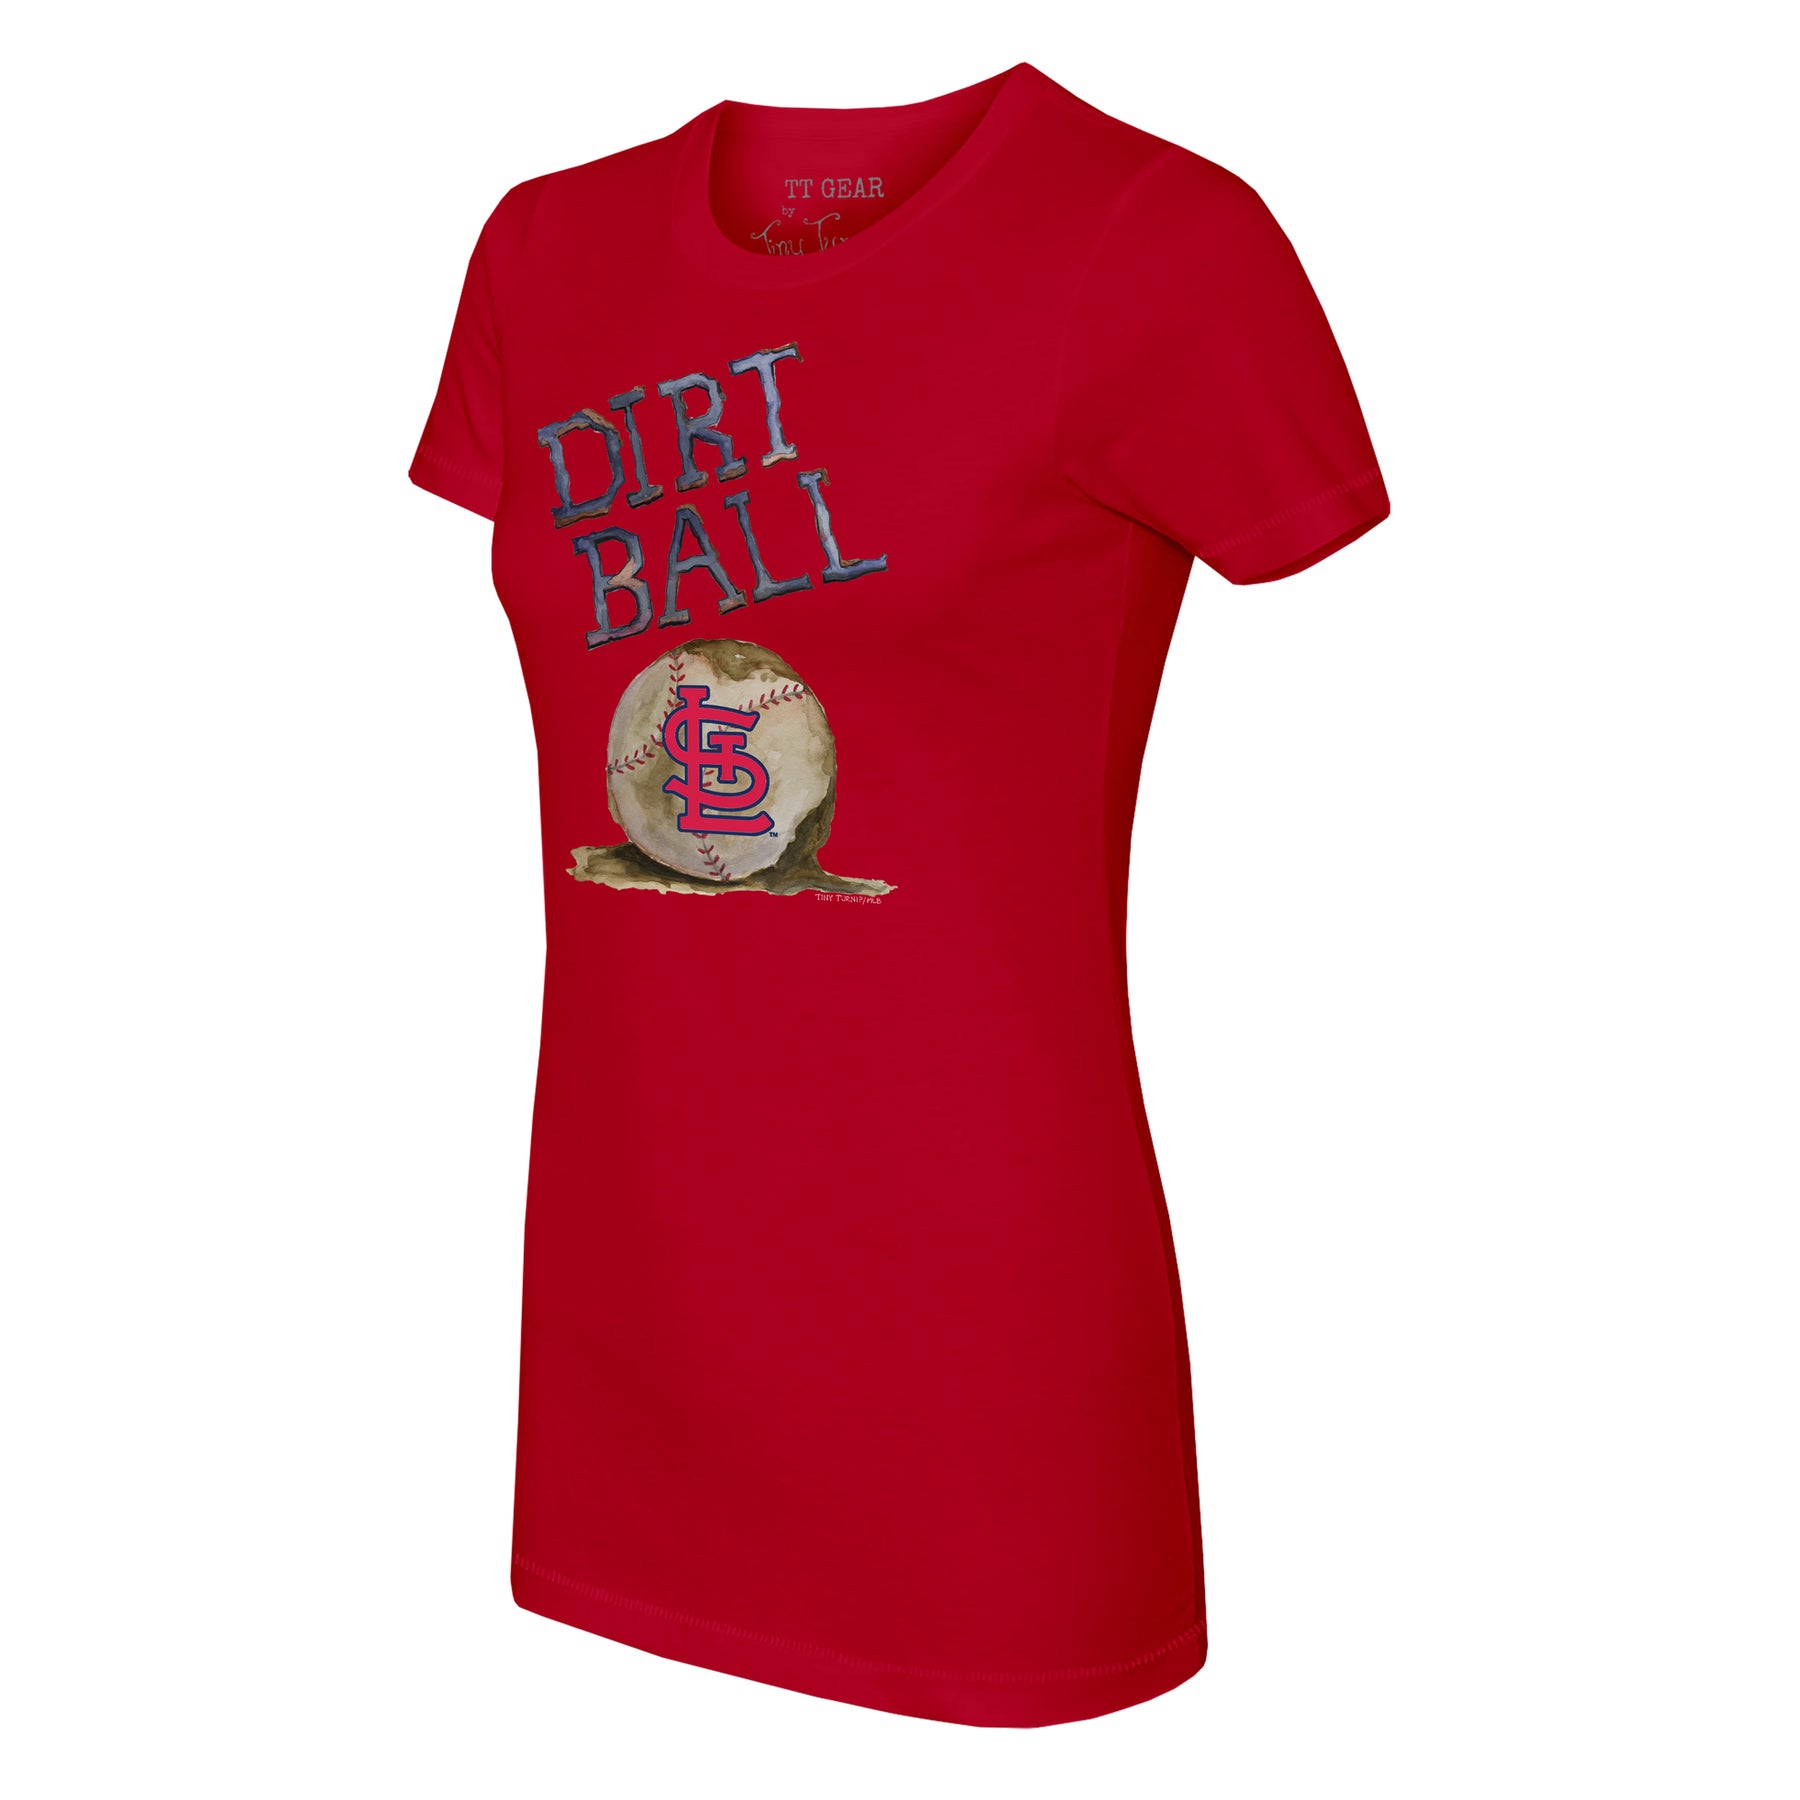 Women's Tiny Turnip White St. Louis Cardinals Baseball Tie T-Shirt Size: 3XL